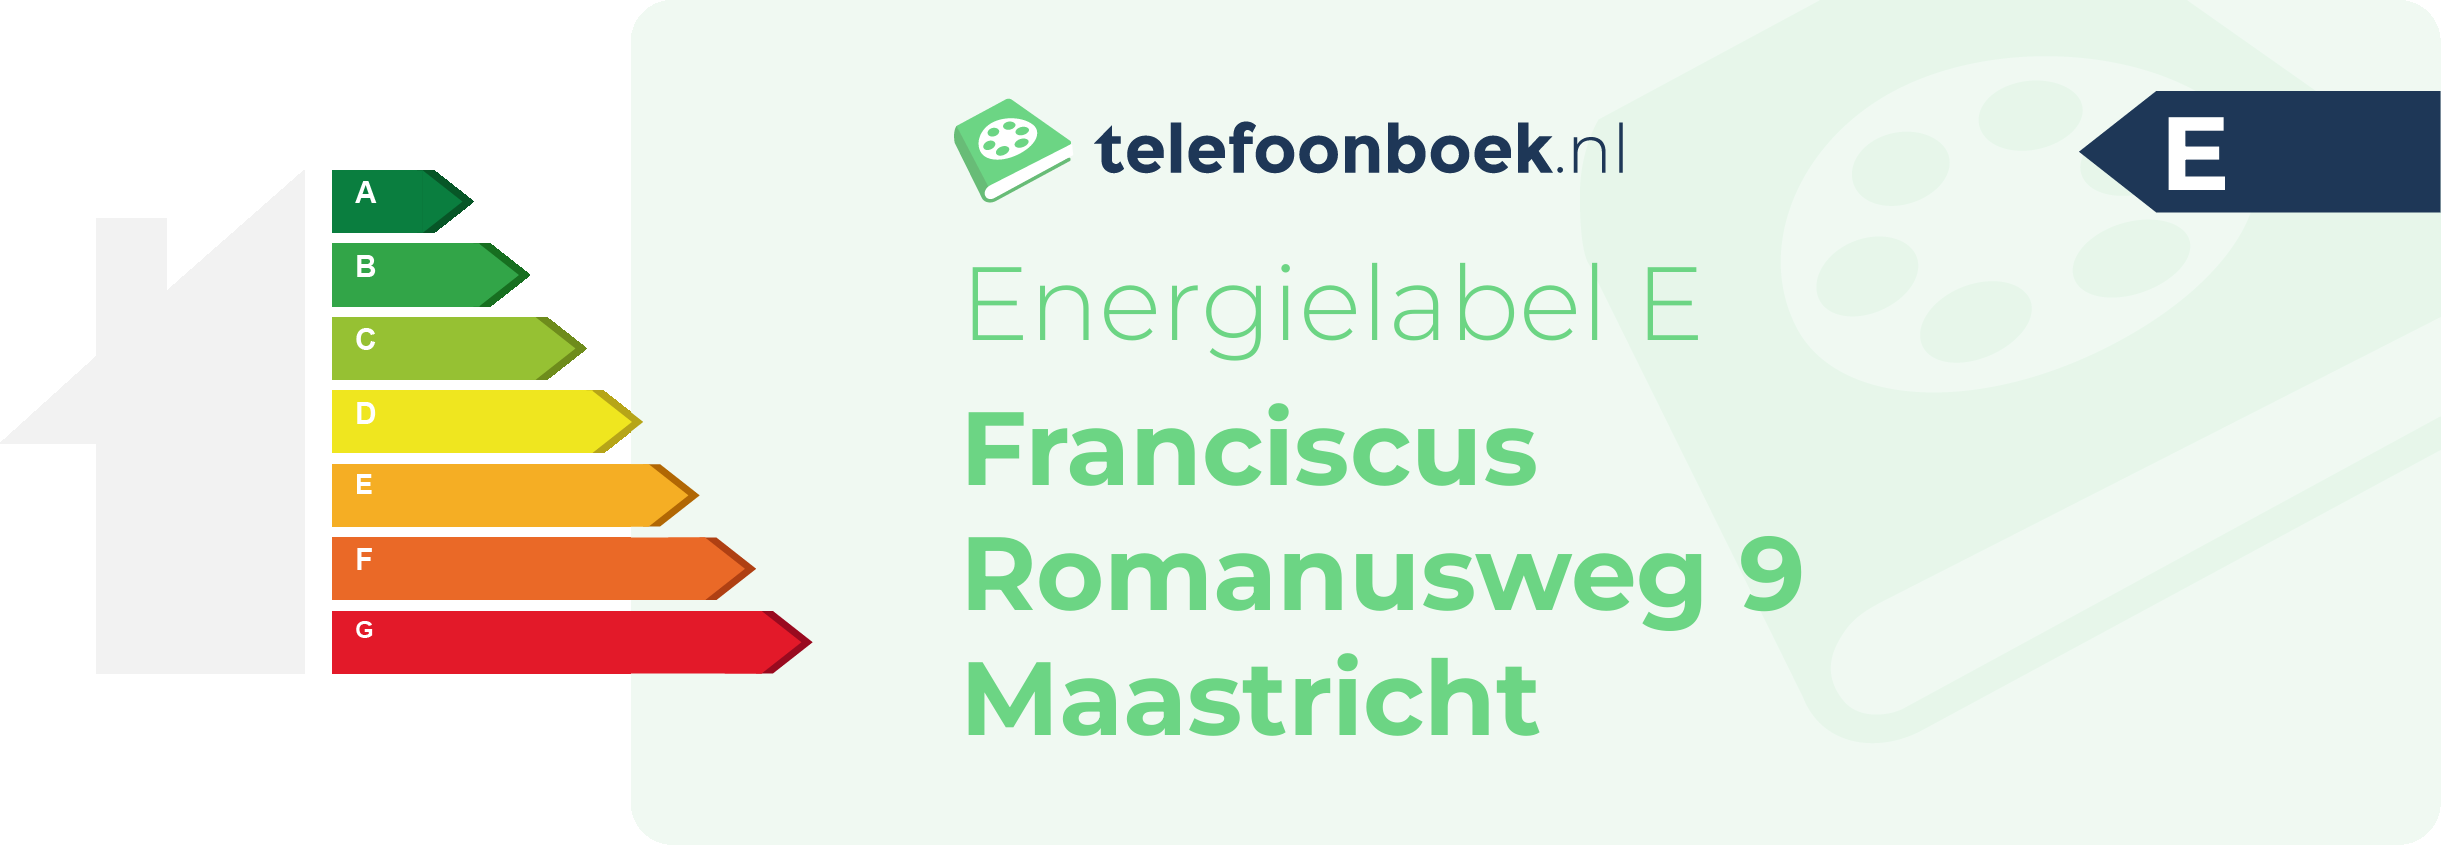 Energielabel Franciscus Romanusweg 9 Maastricht